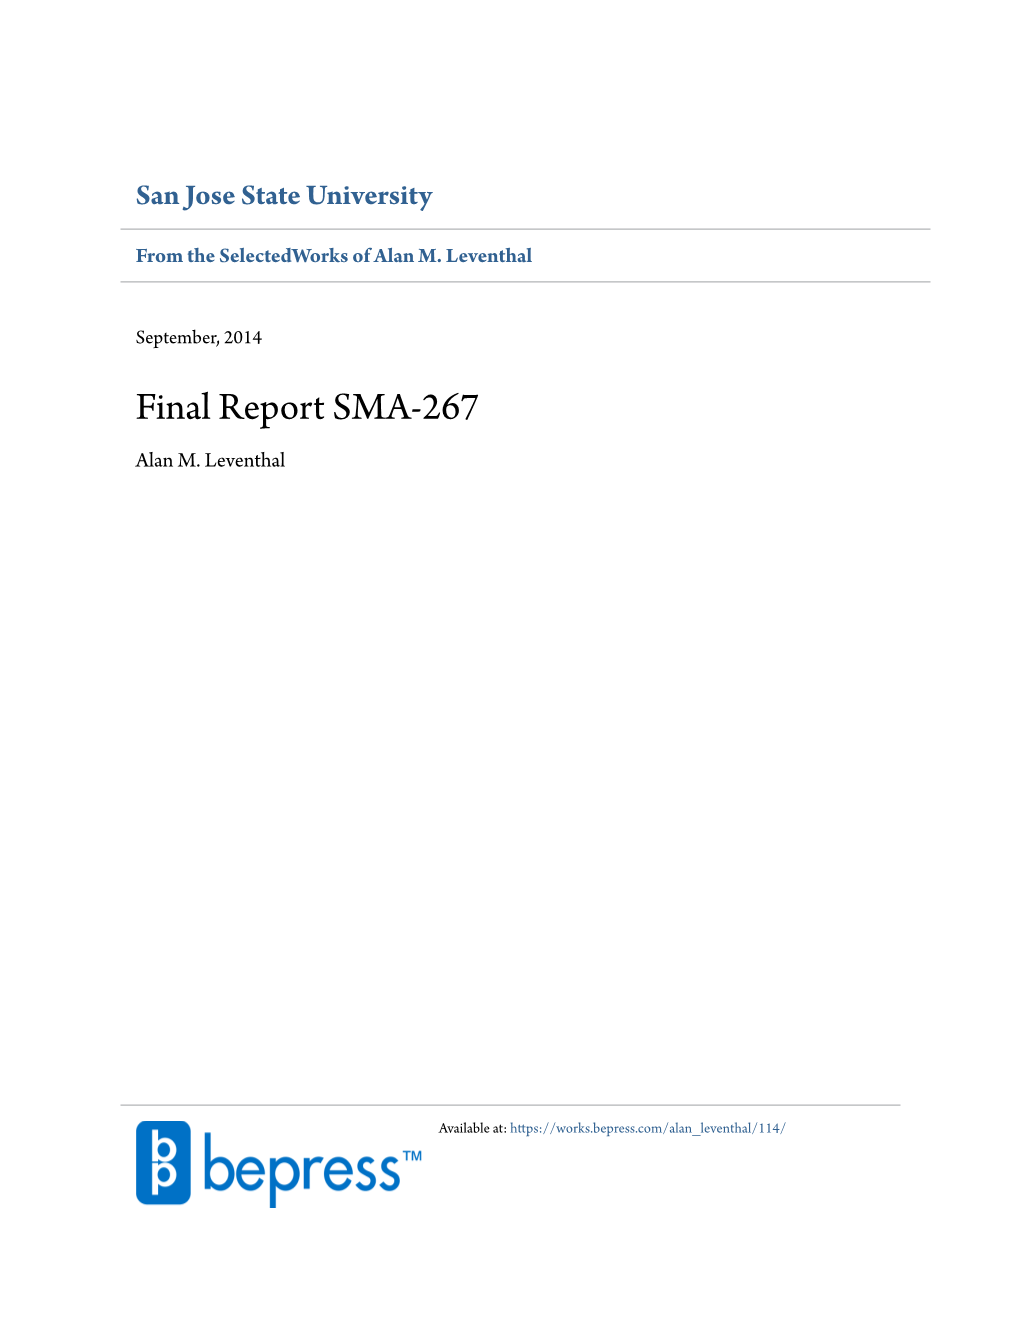 Final Report SMA-267 Alan M